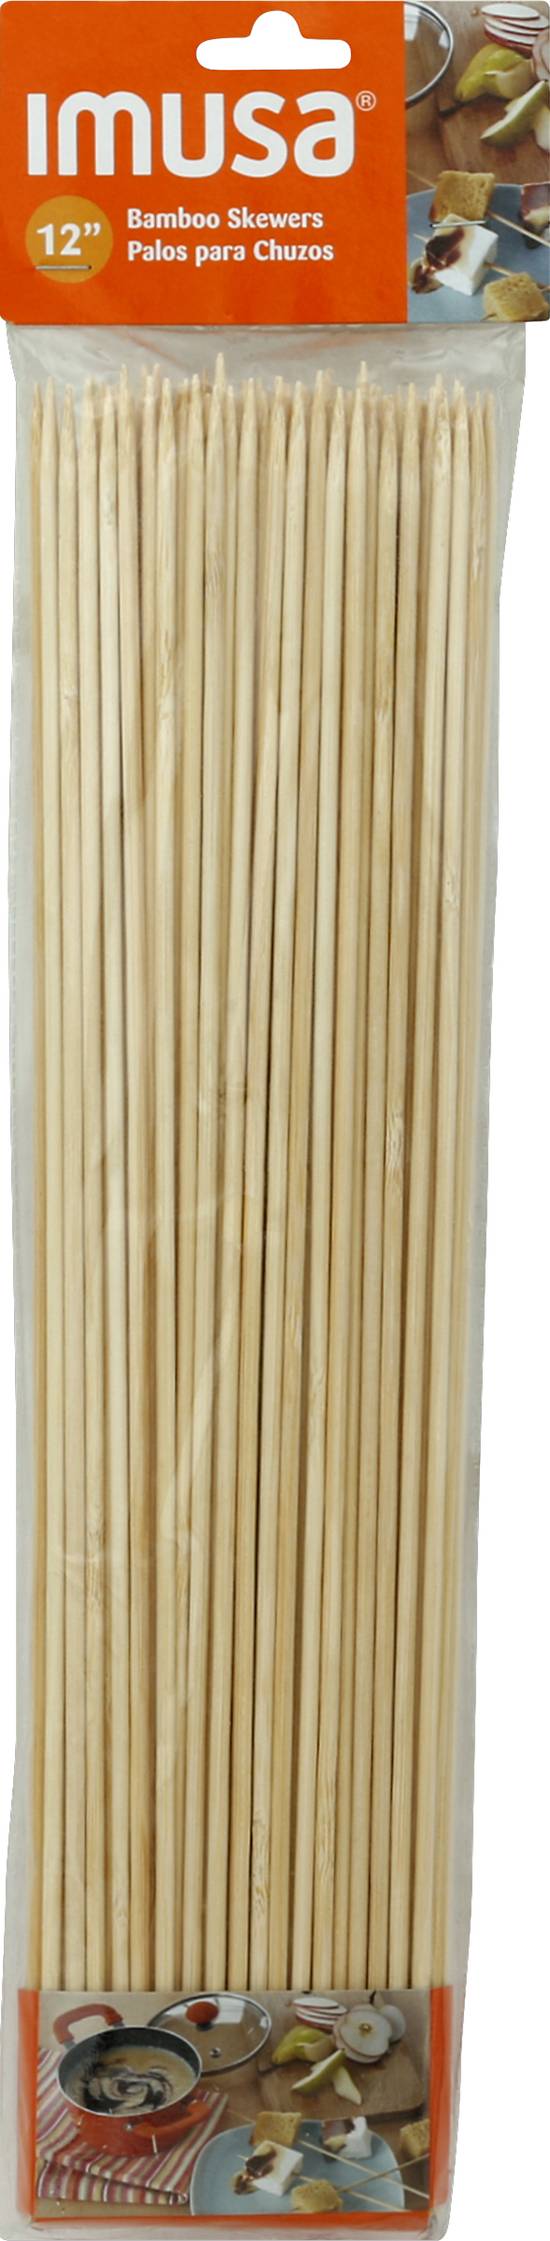 Imusa Bamboo Skewers 14"